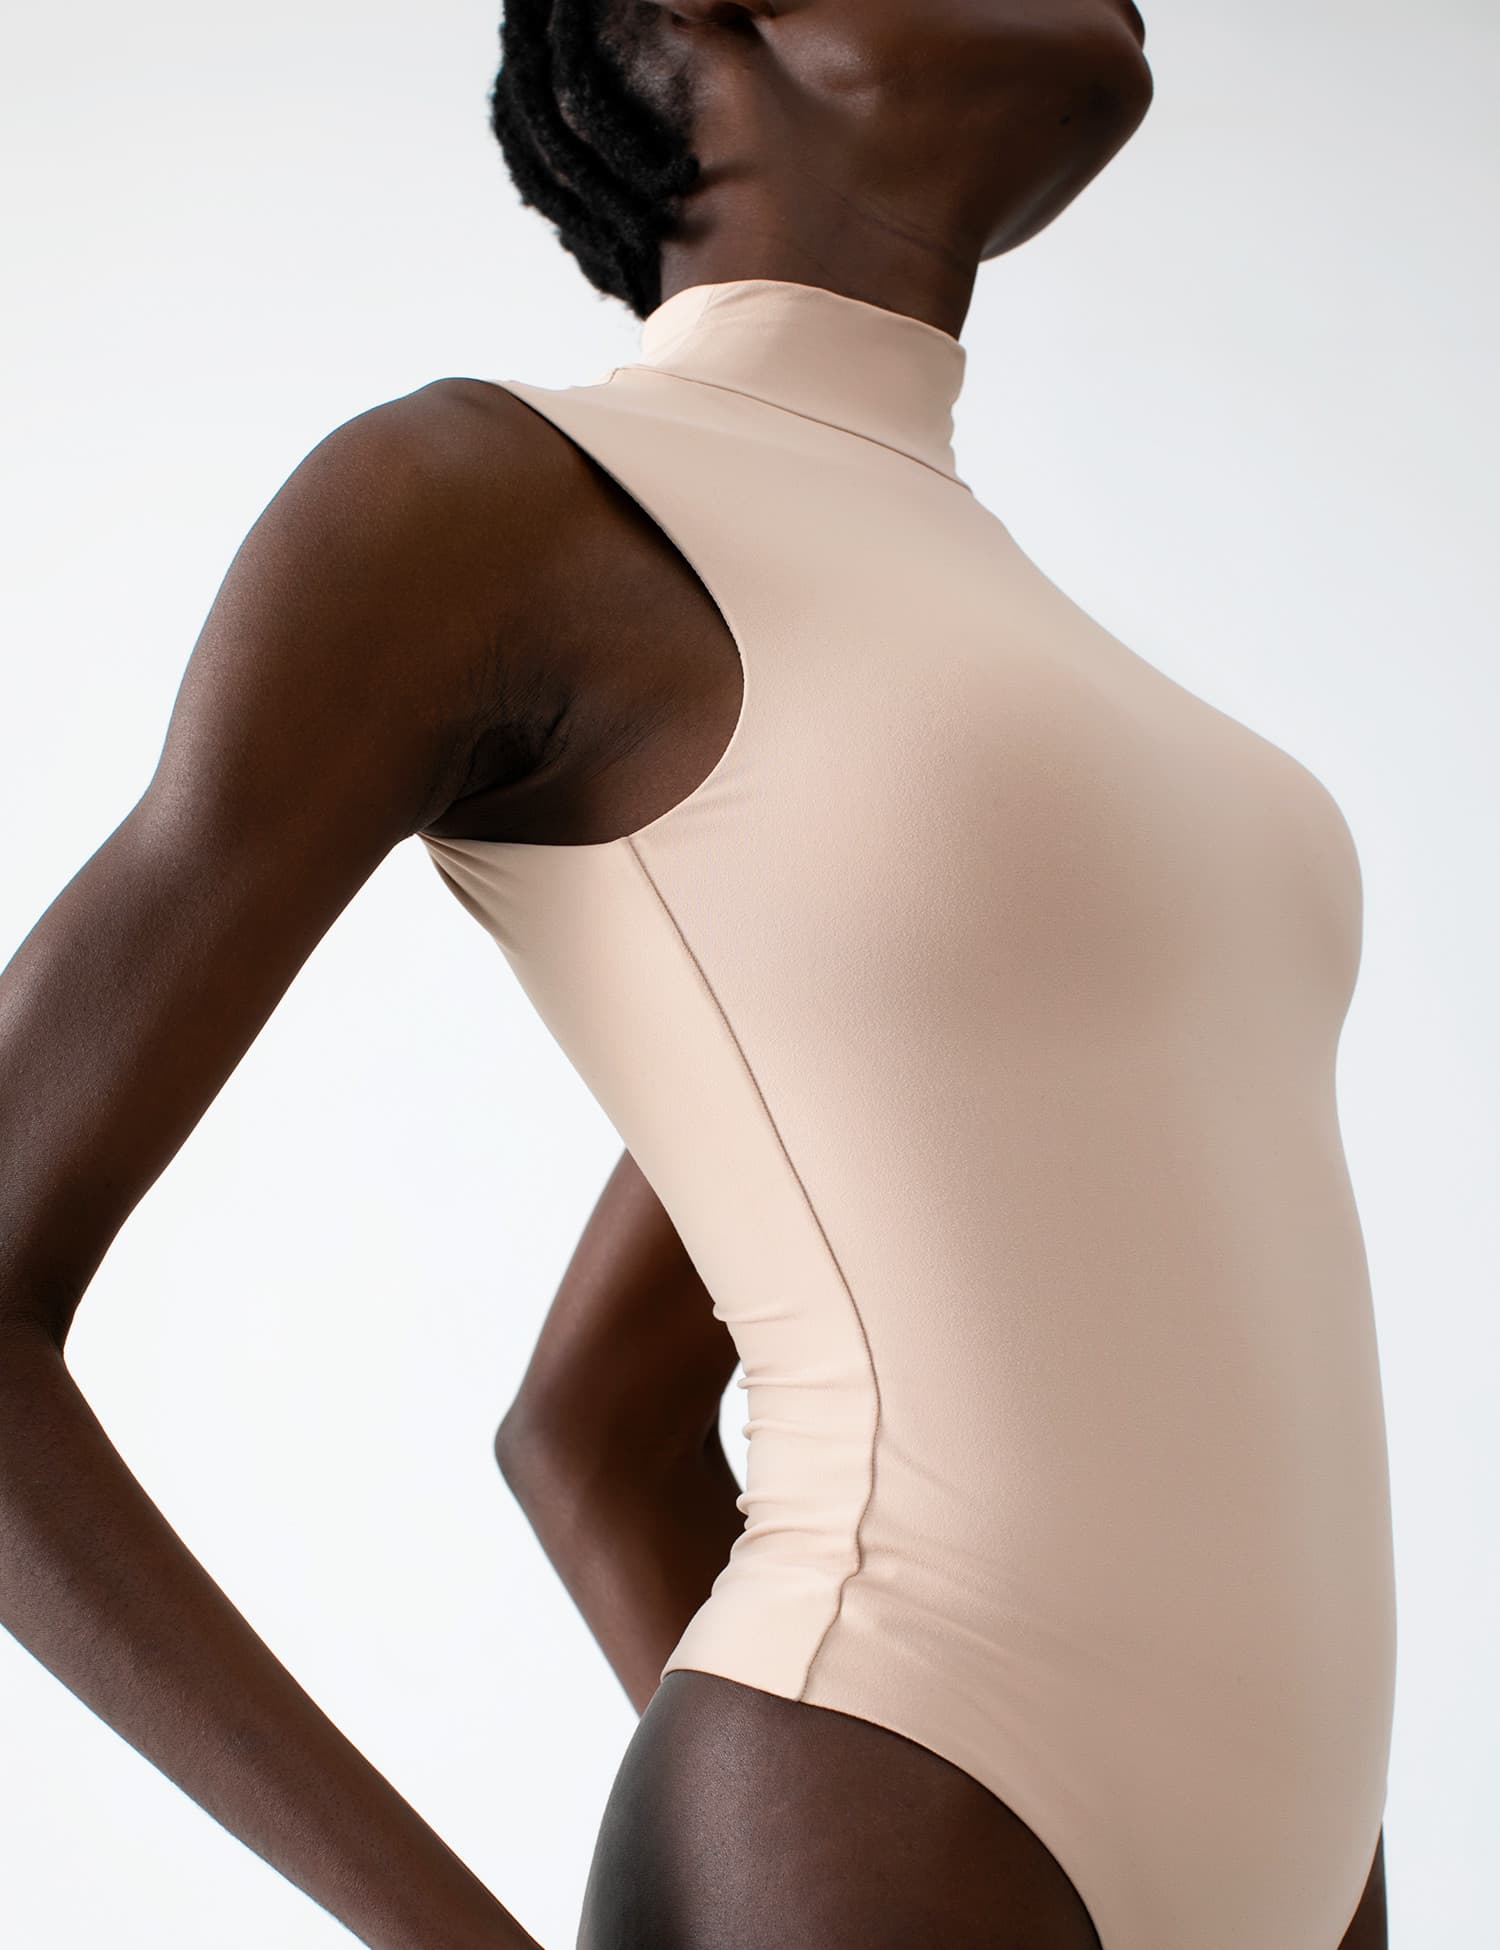 PUMIEY Bodysuit for Women Sleeveless Backless Tank Top Sharp